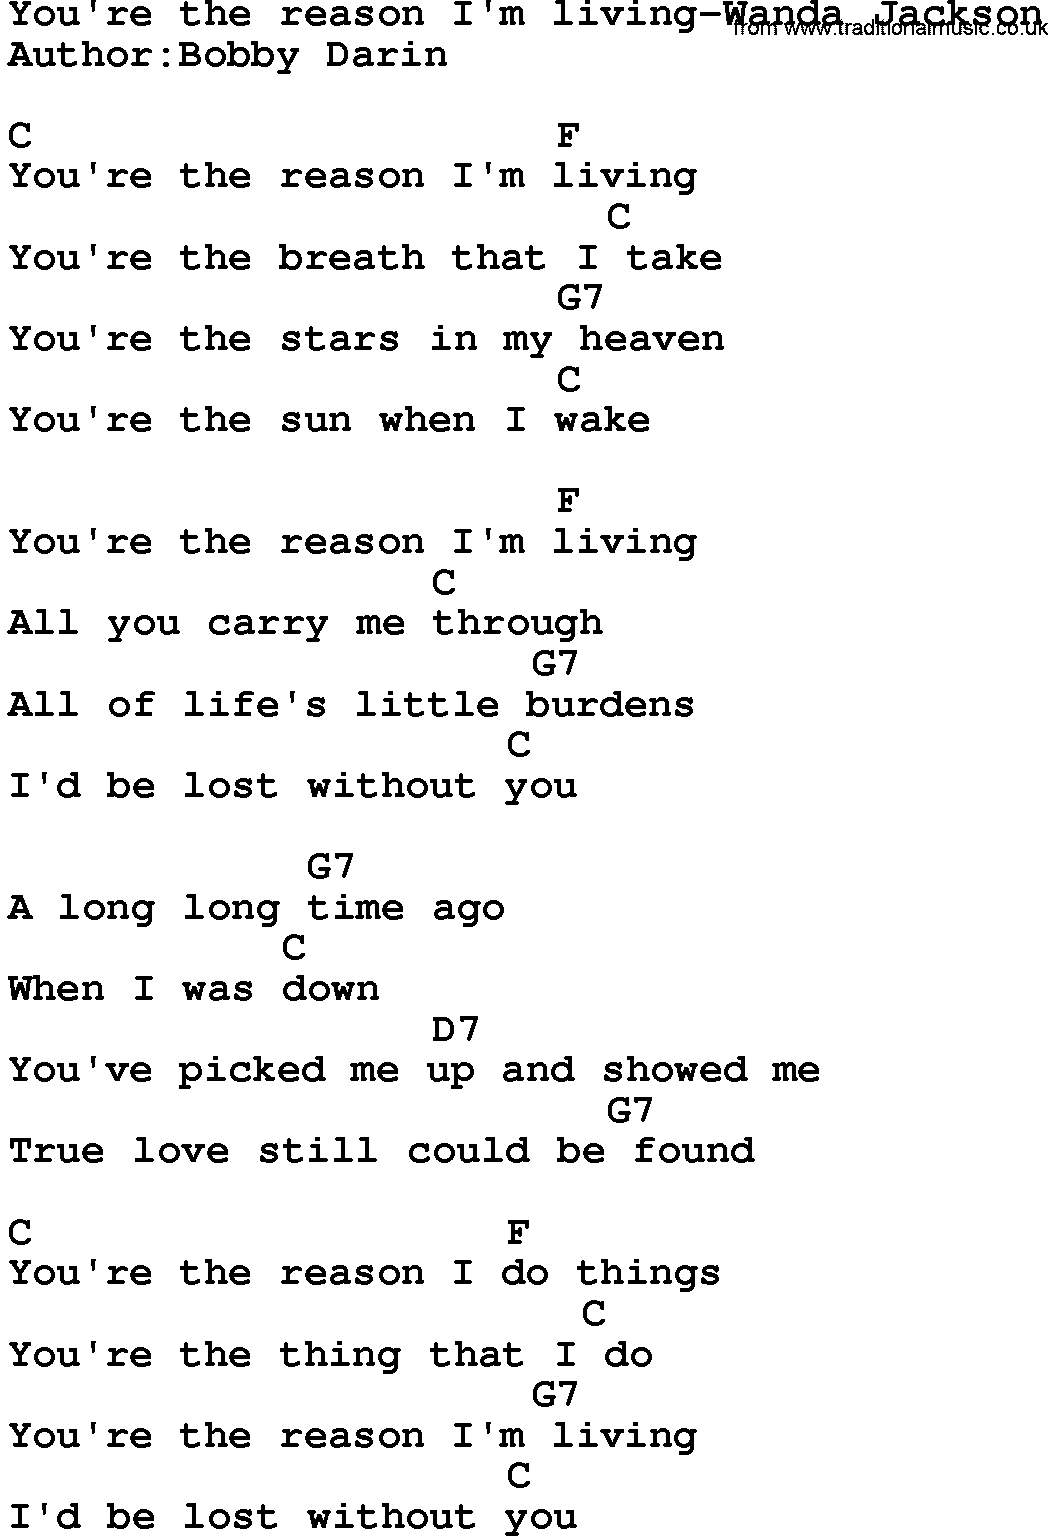 Country music song: You're The Reason I'm Living-Wanda Jackson lyrics and chords